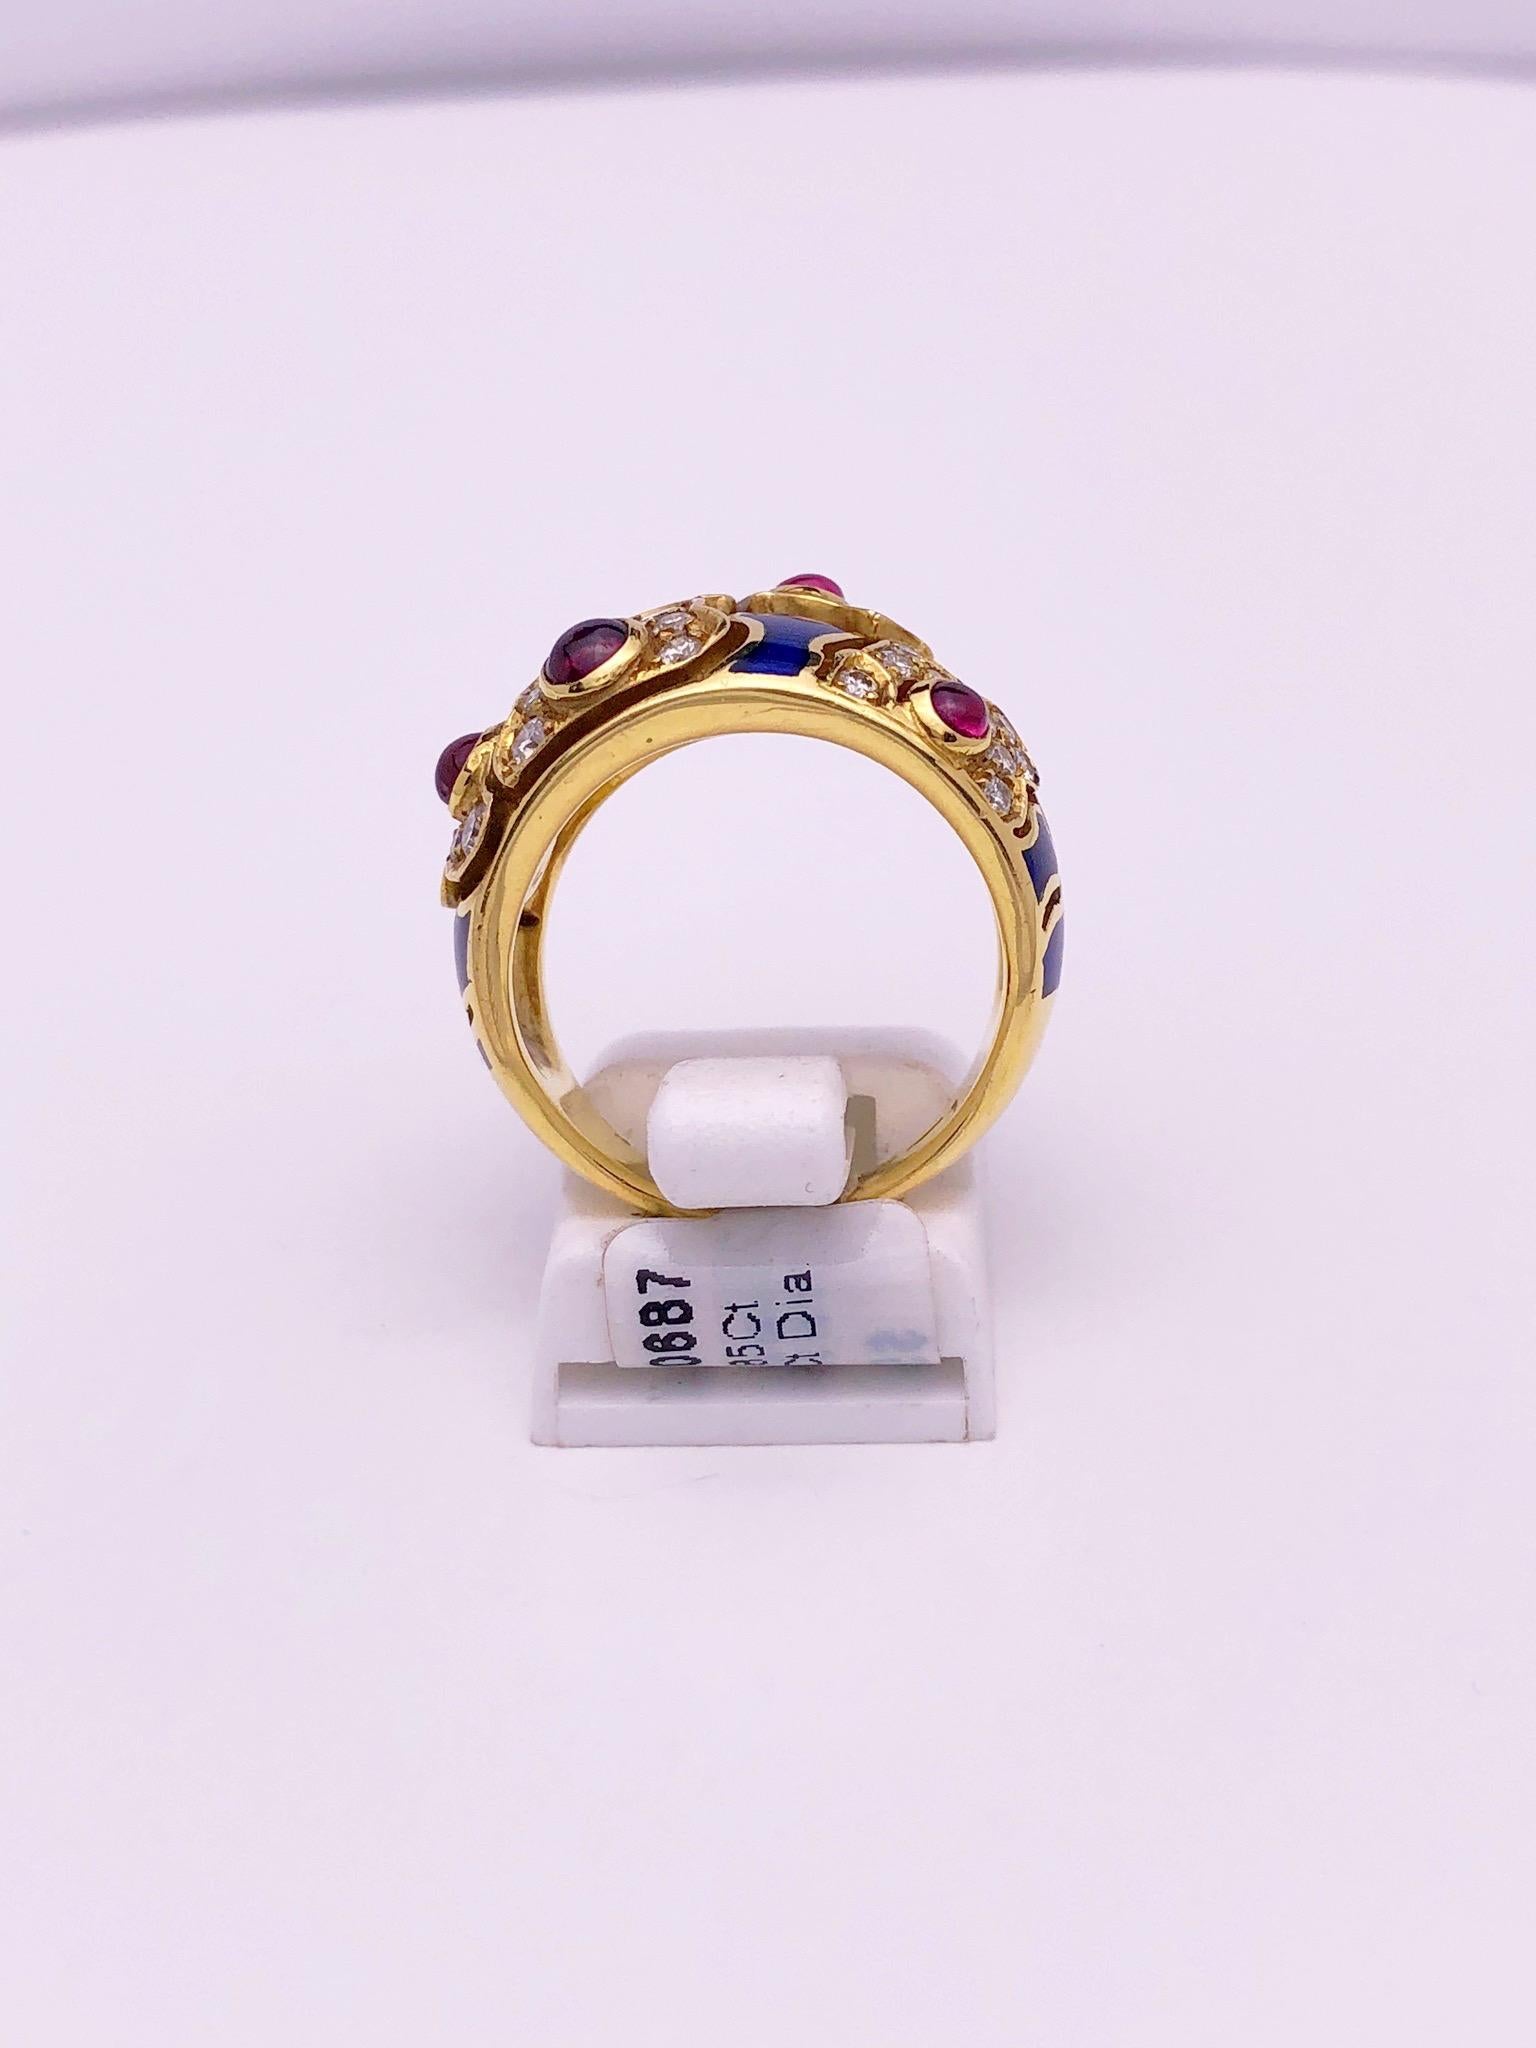 Round Cut 18 Karat Yellow Gold Ring with Rubies, Diamonds and Enamel